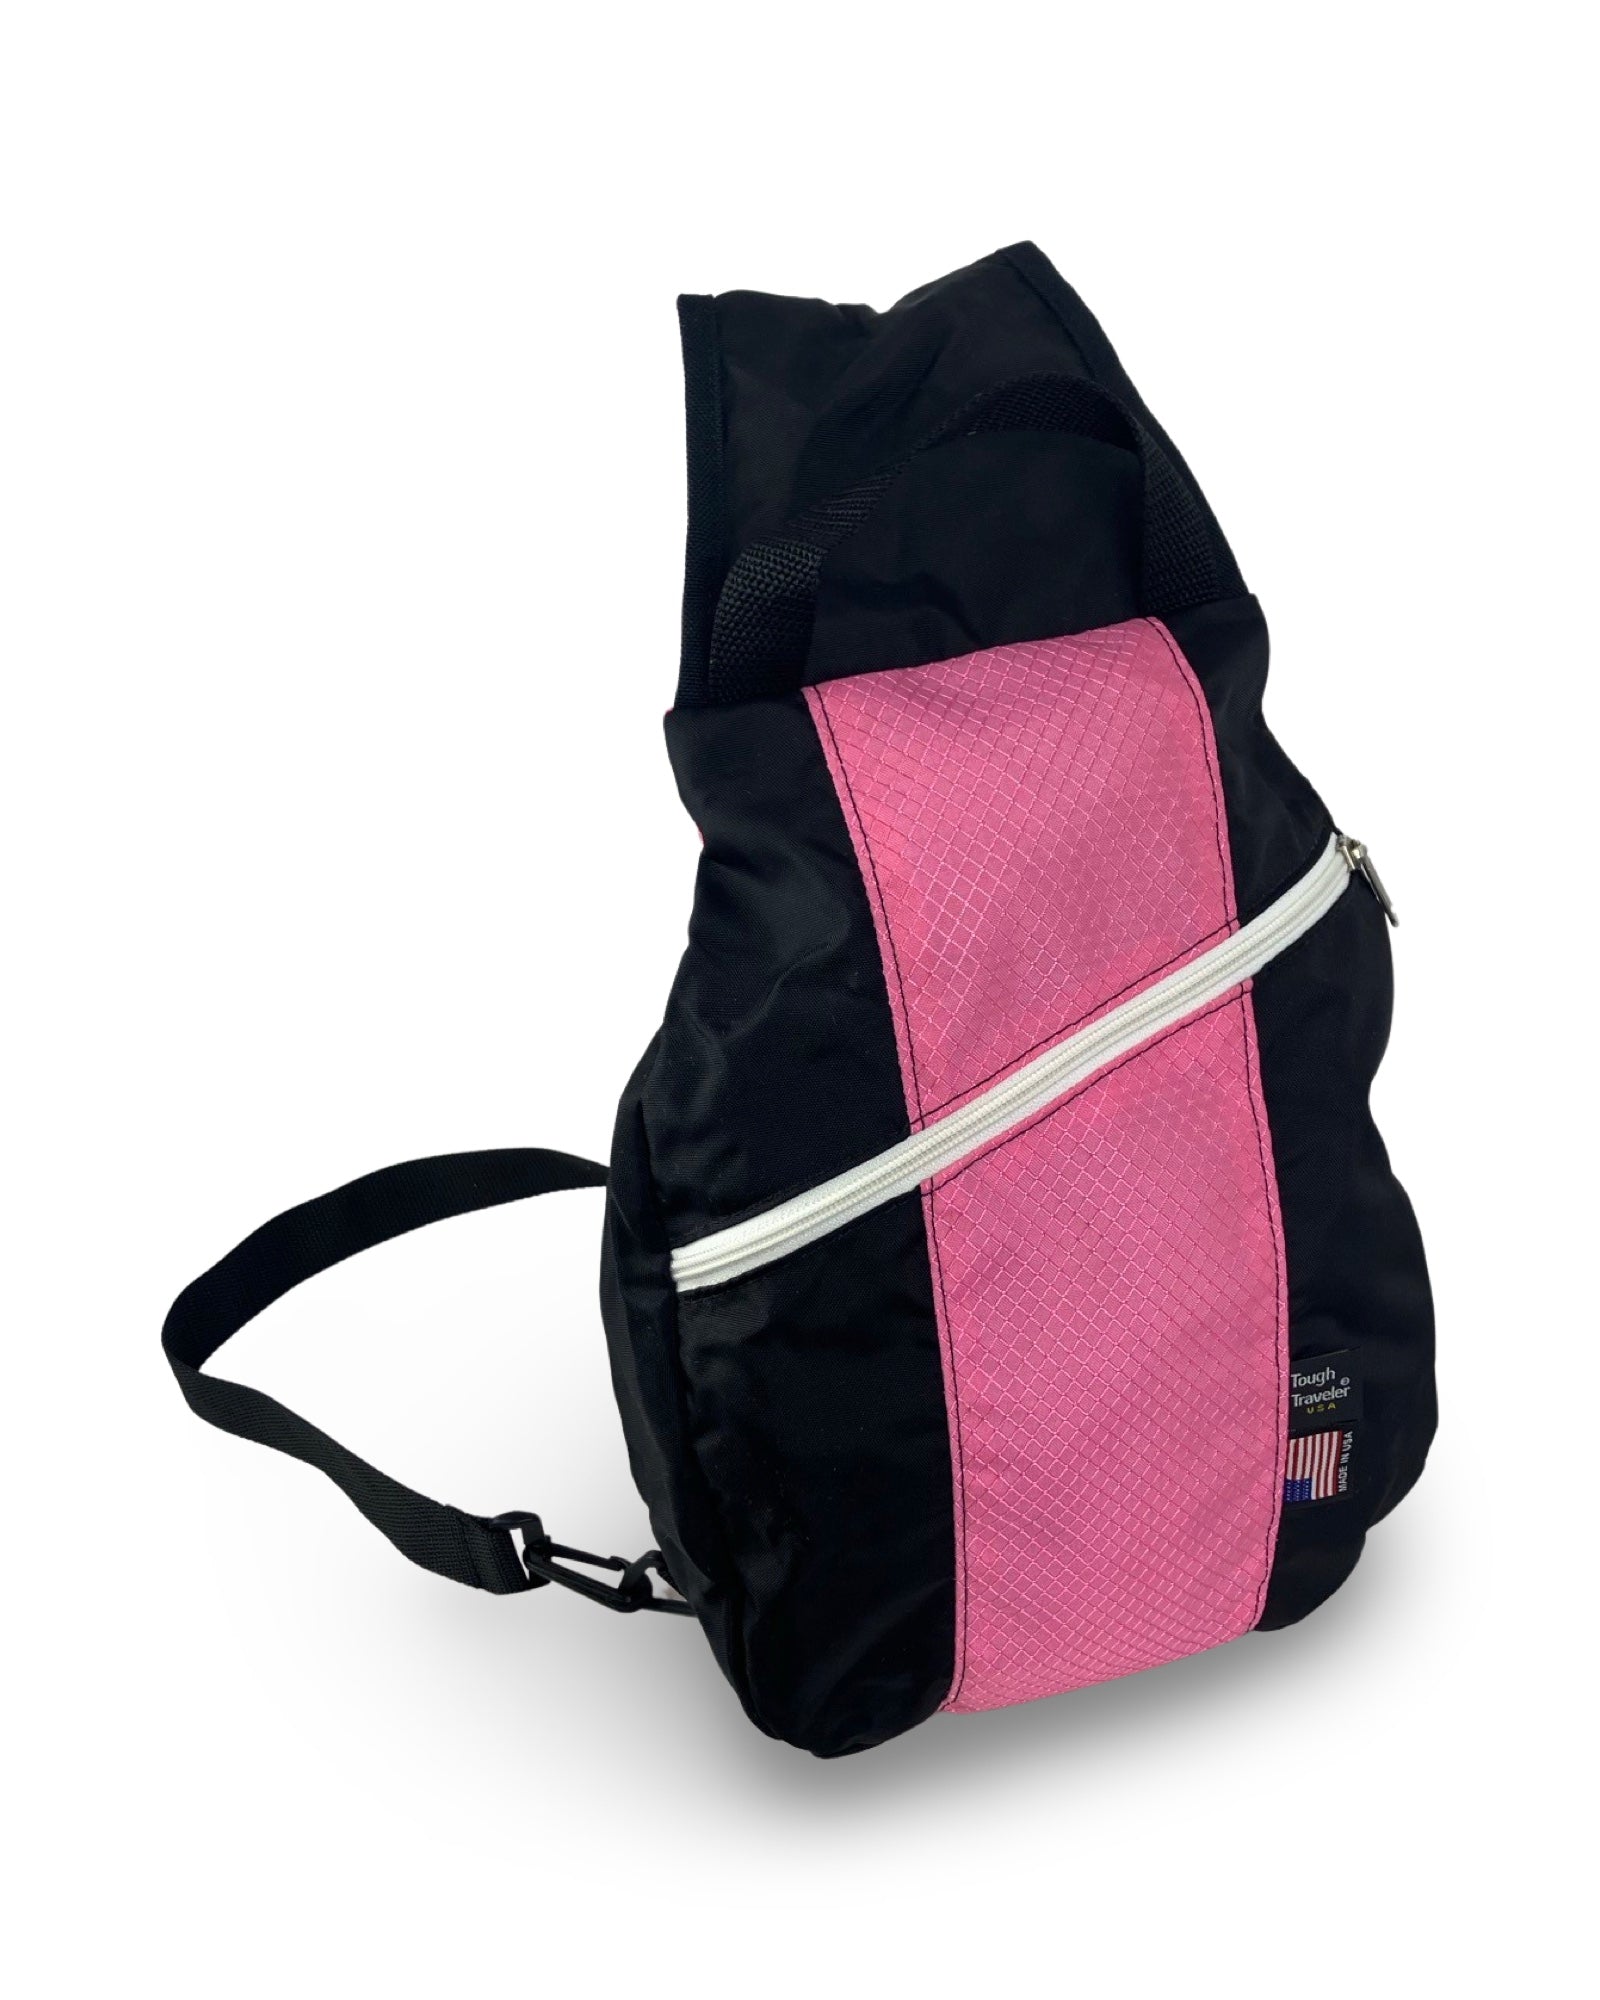 K-POP Sling Sling Backpacks, by Tough Traveler. Made in USA since 1970